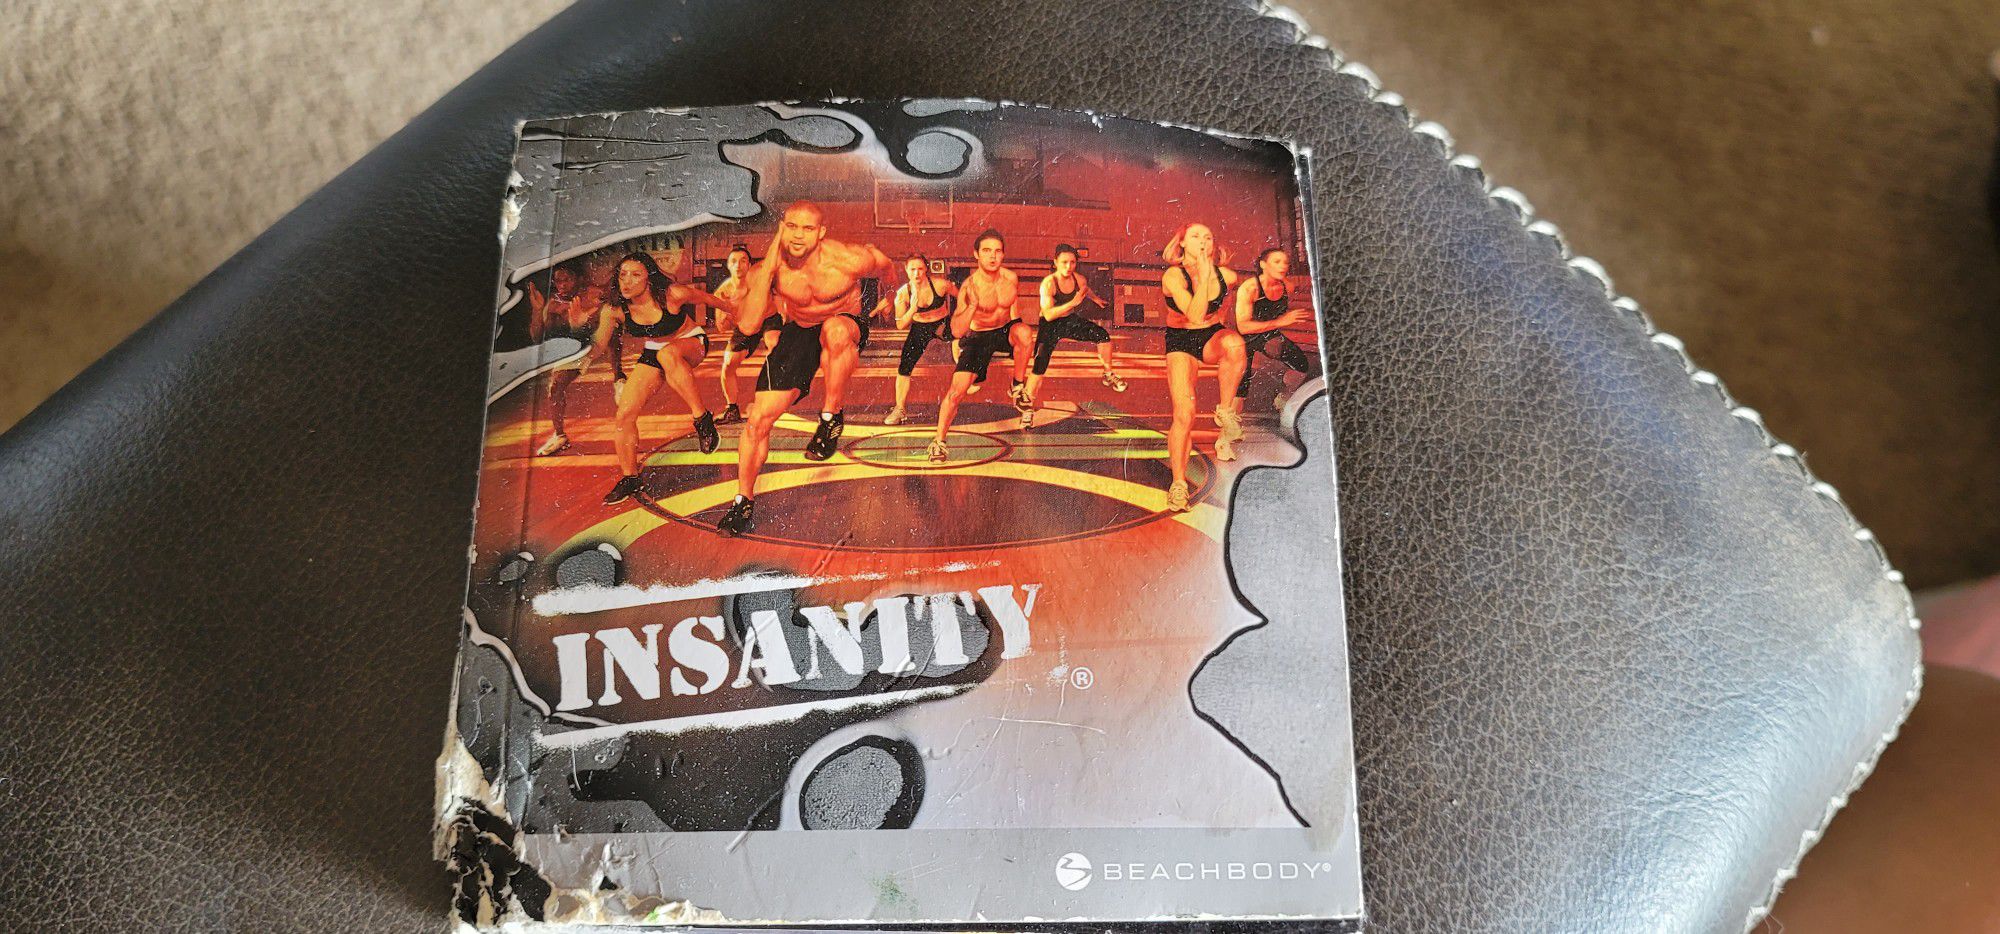 Insanity workout $40